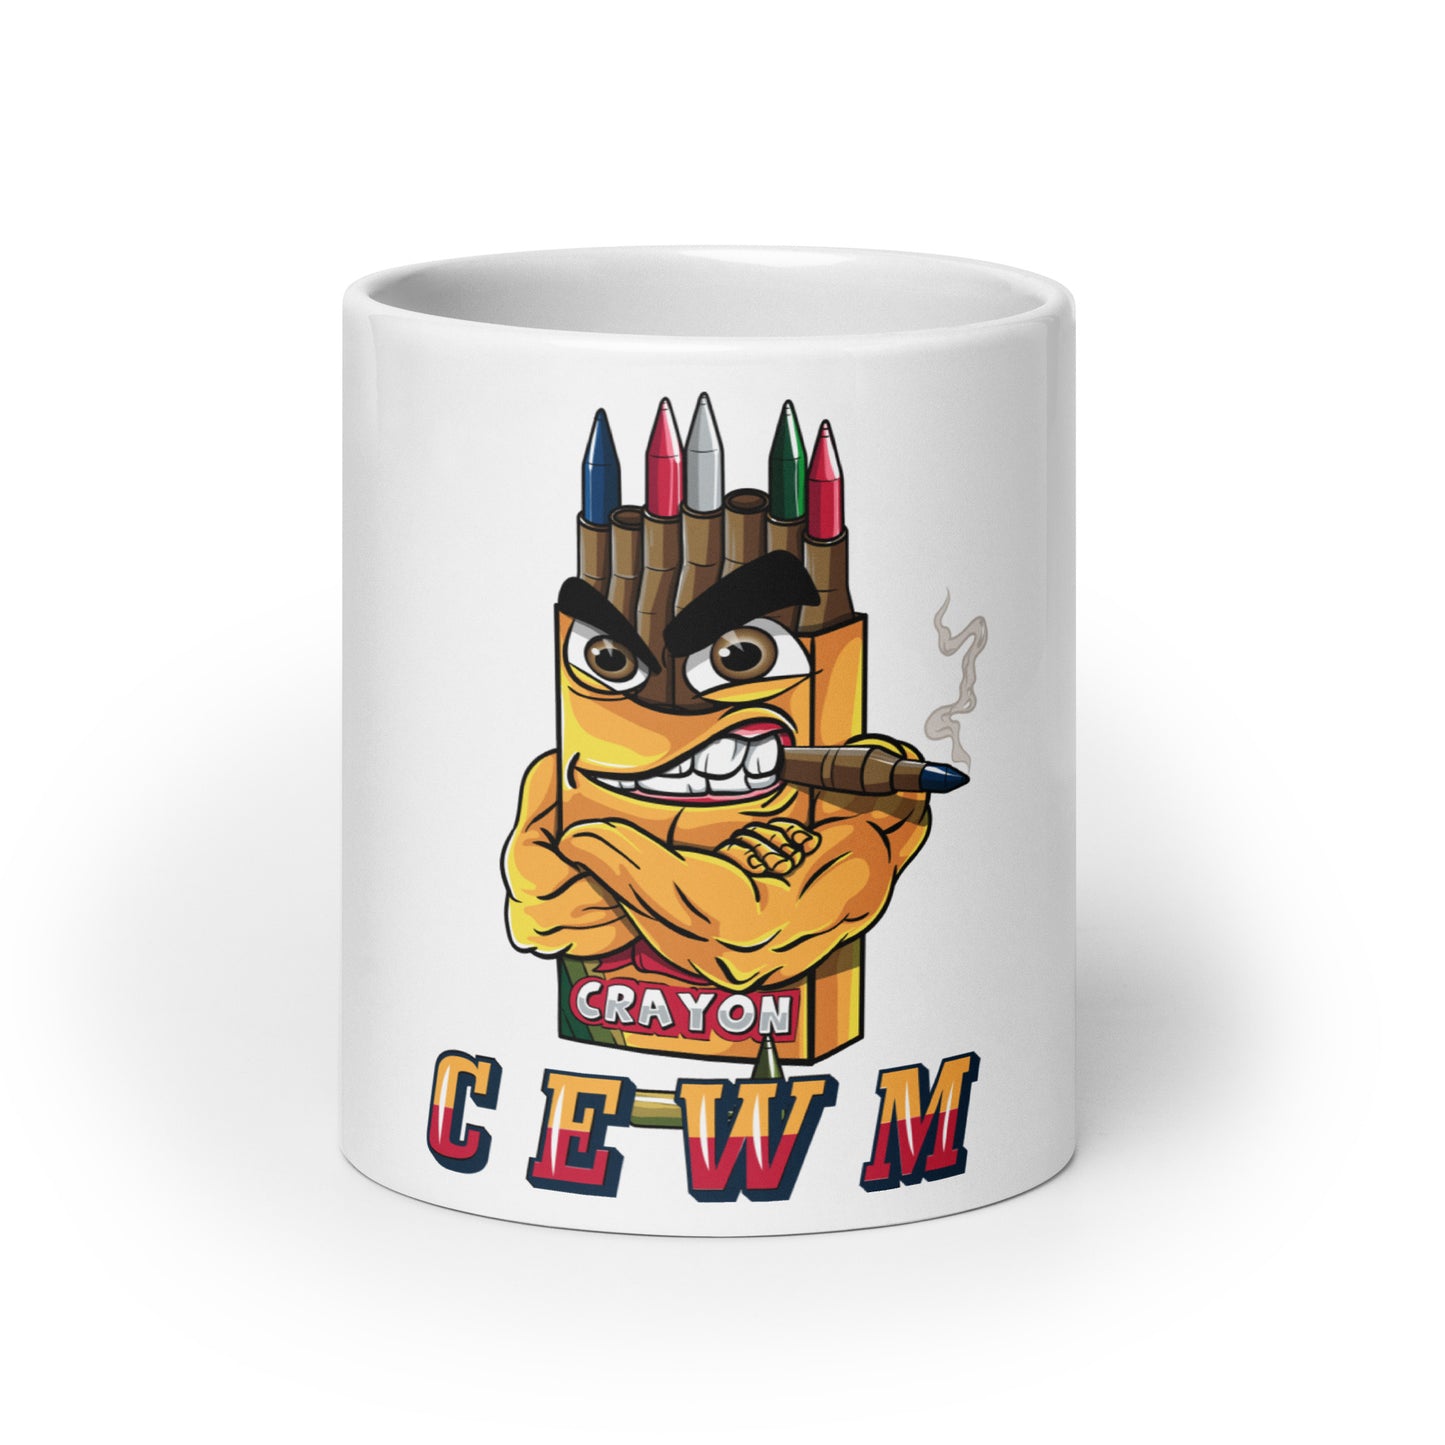 C.E.W.M - White glossy mug